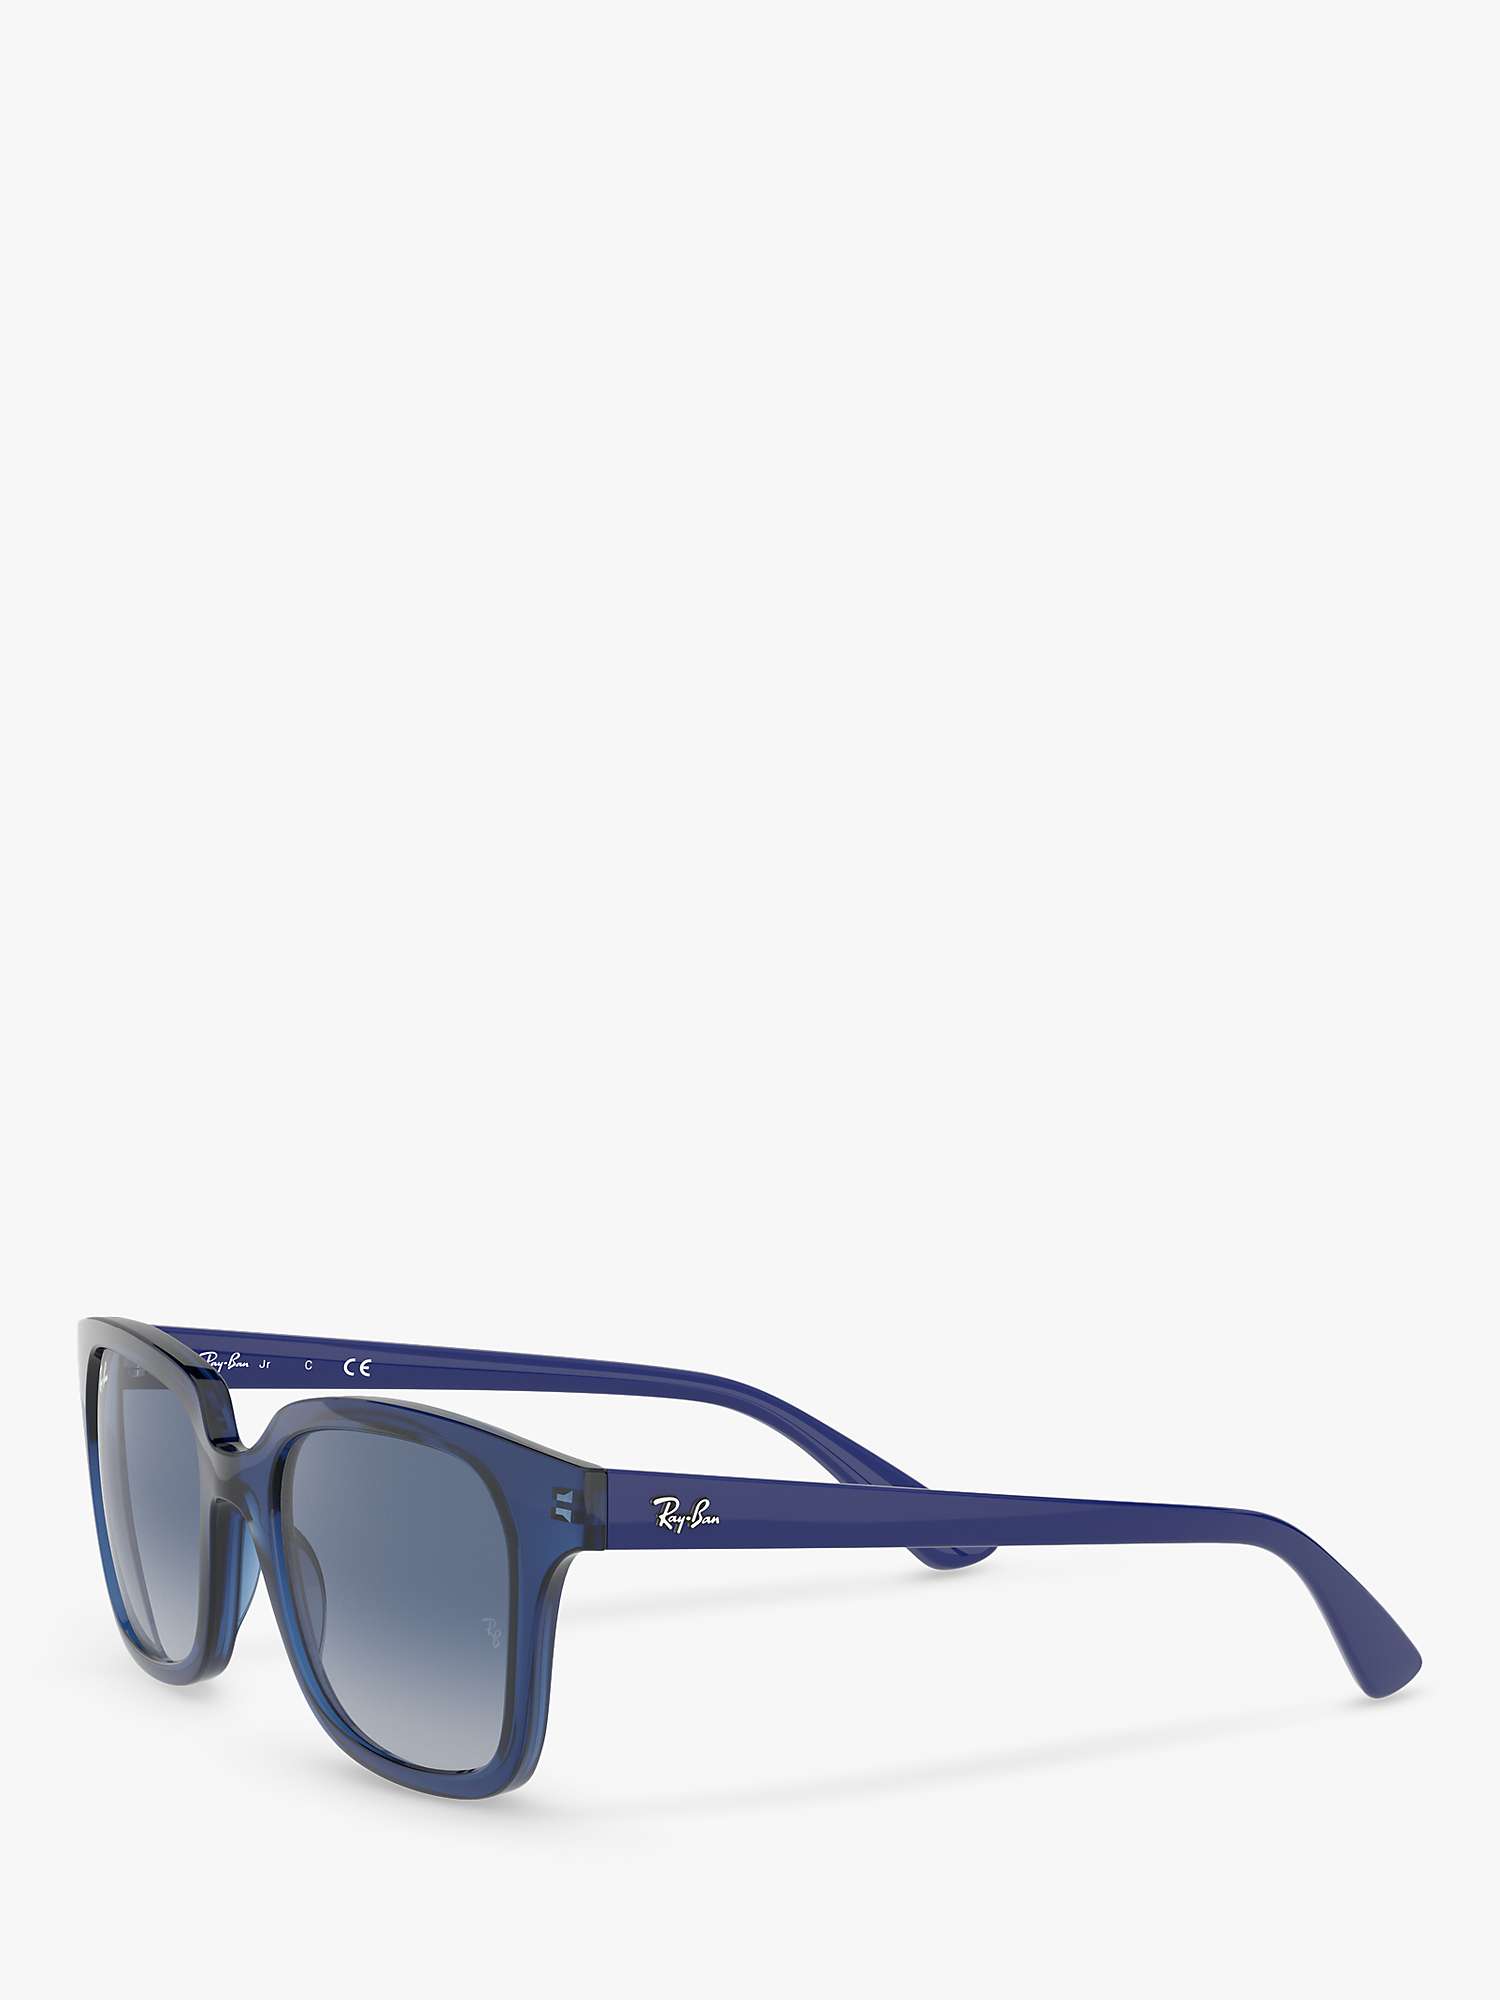 Buy Ray-Ban Junior RJ9071S Unisex Square Sunglasses, Blue/Blue Gradient Online at johnlewis.com